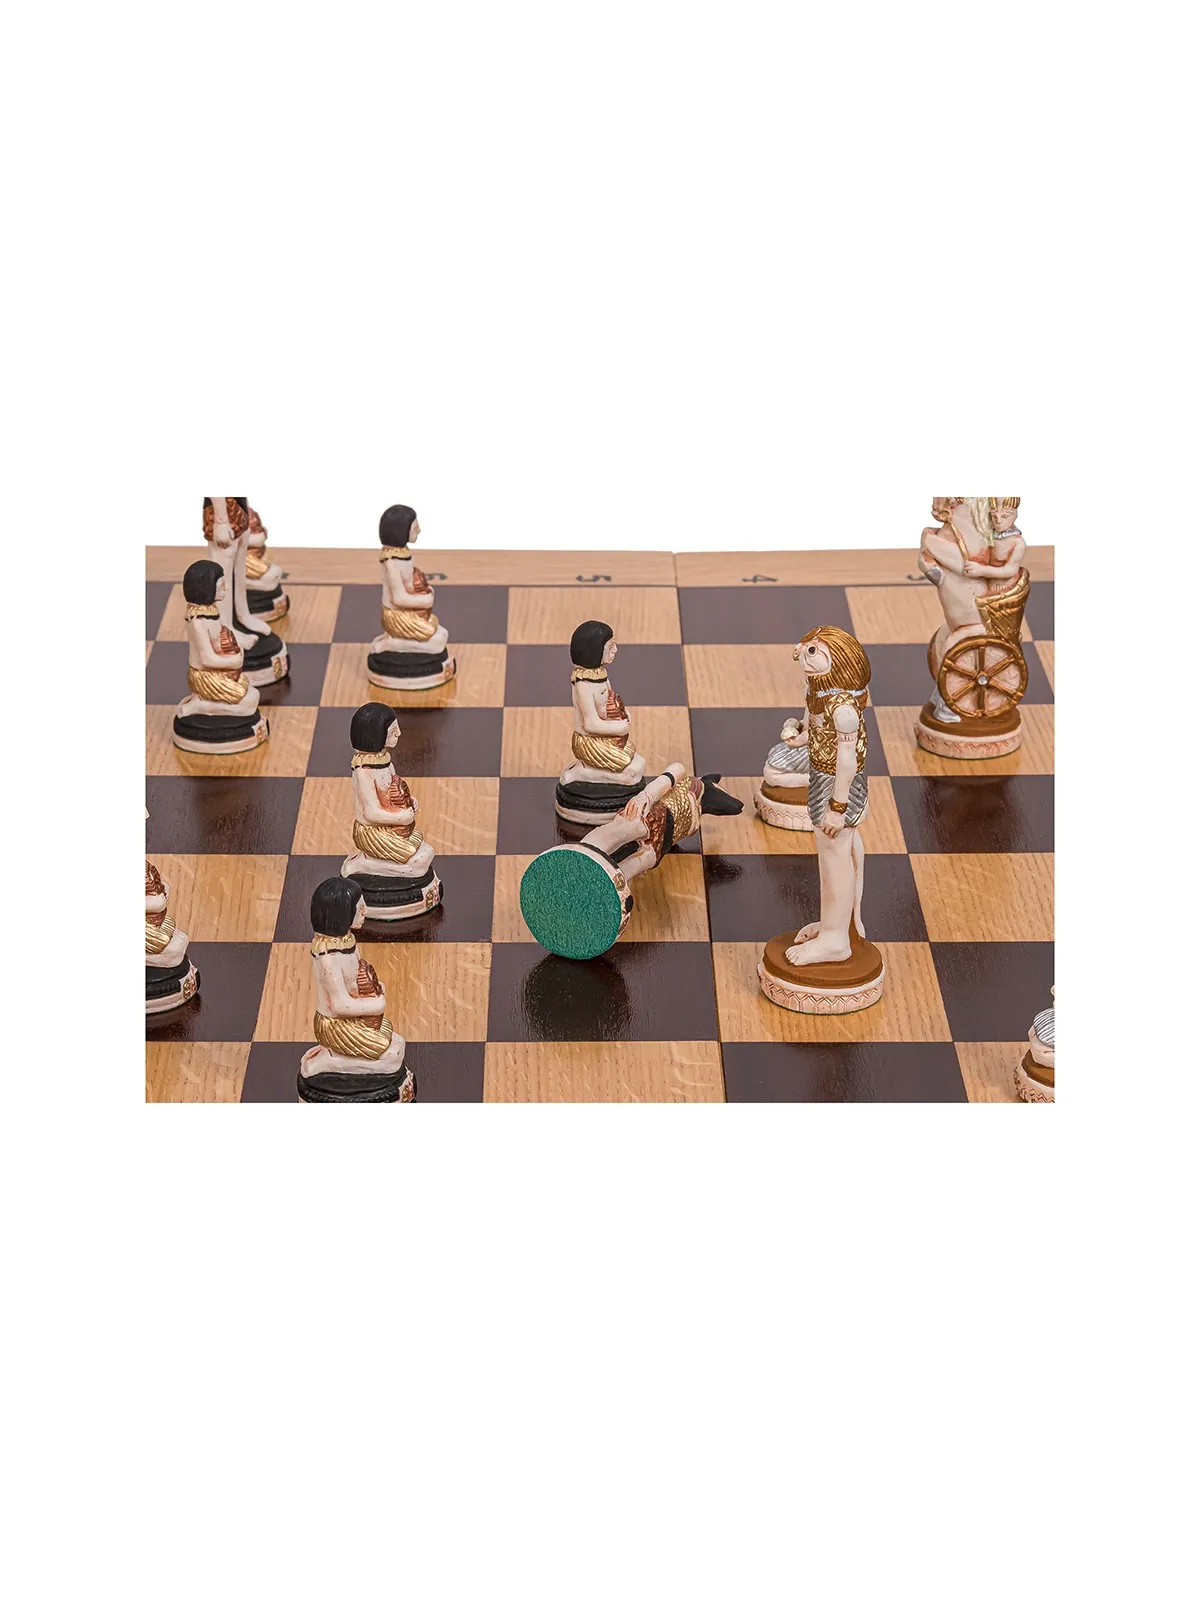 Chess Grunwald